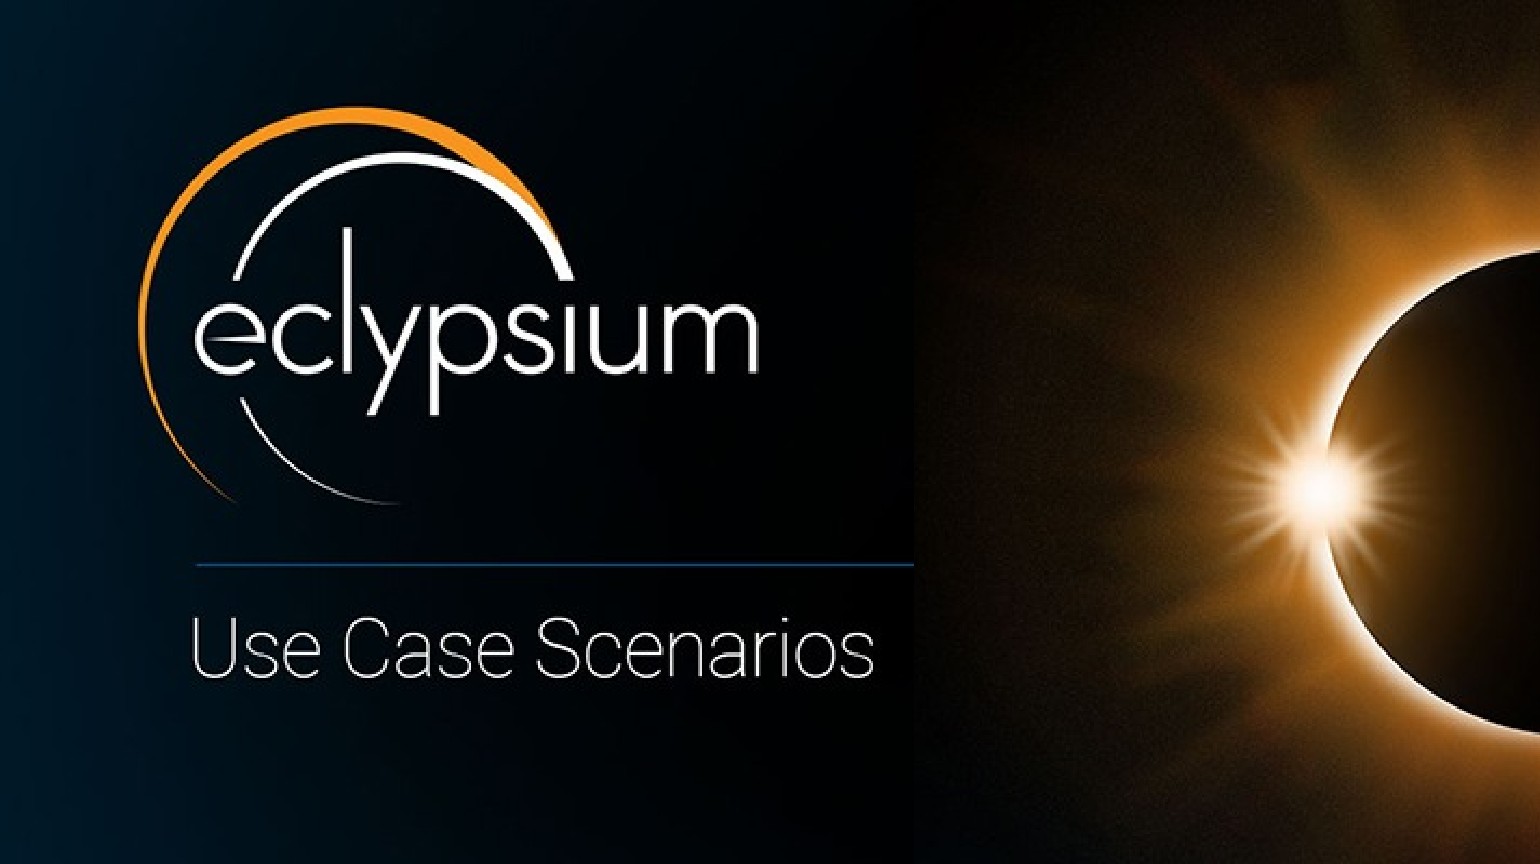 Eclypsium Use Case Scenarios